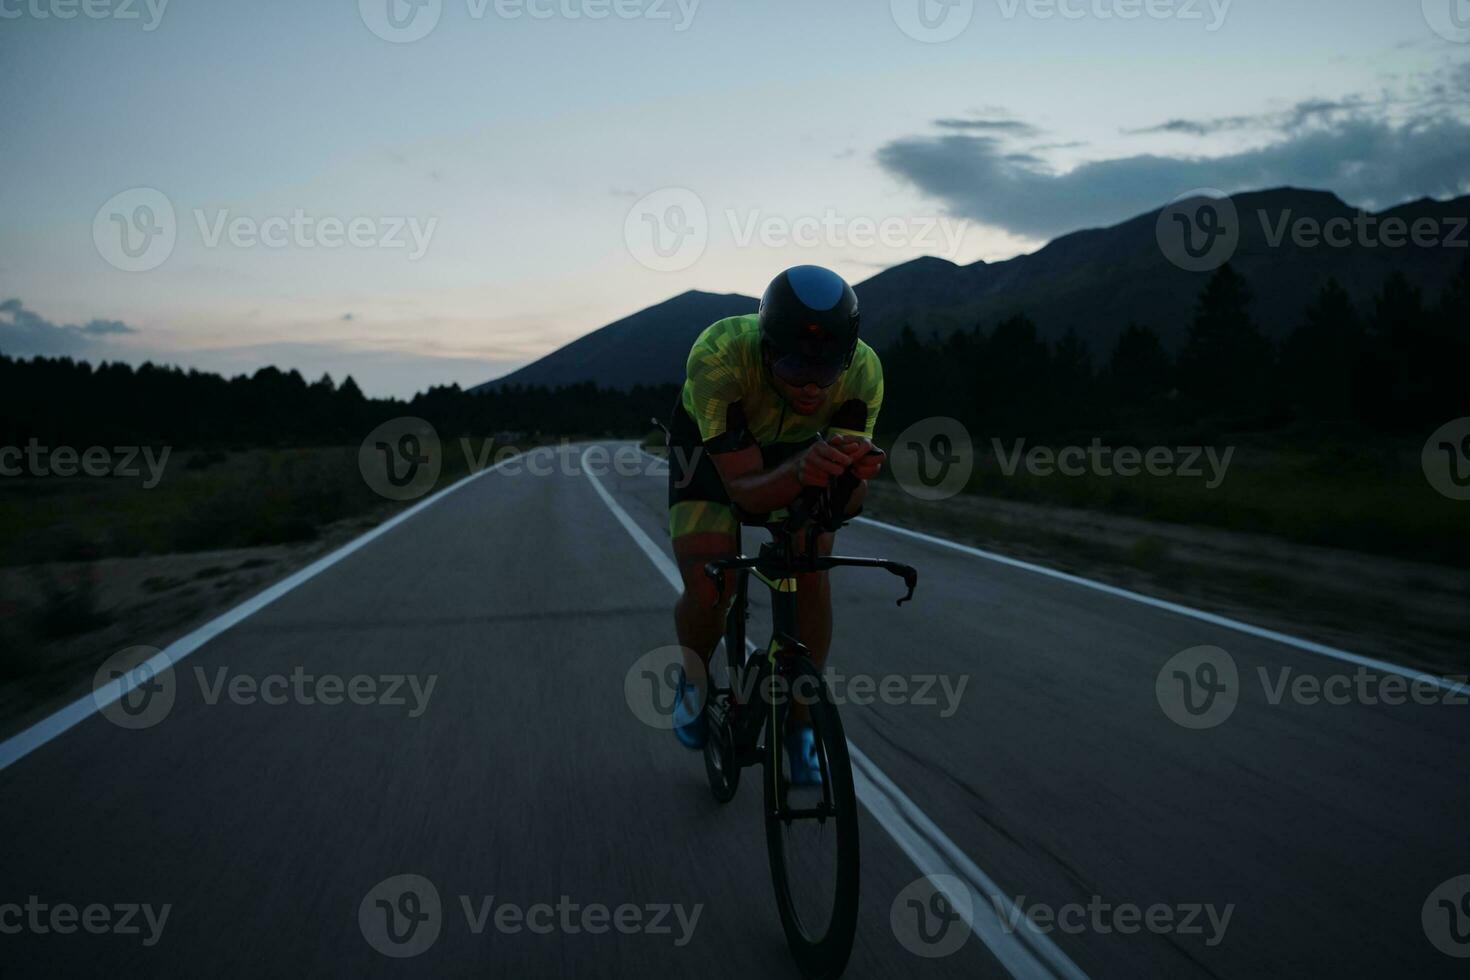 atleta di triathlon in bicicletta di notte foto